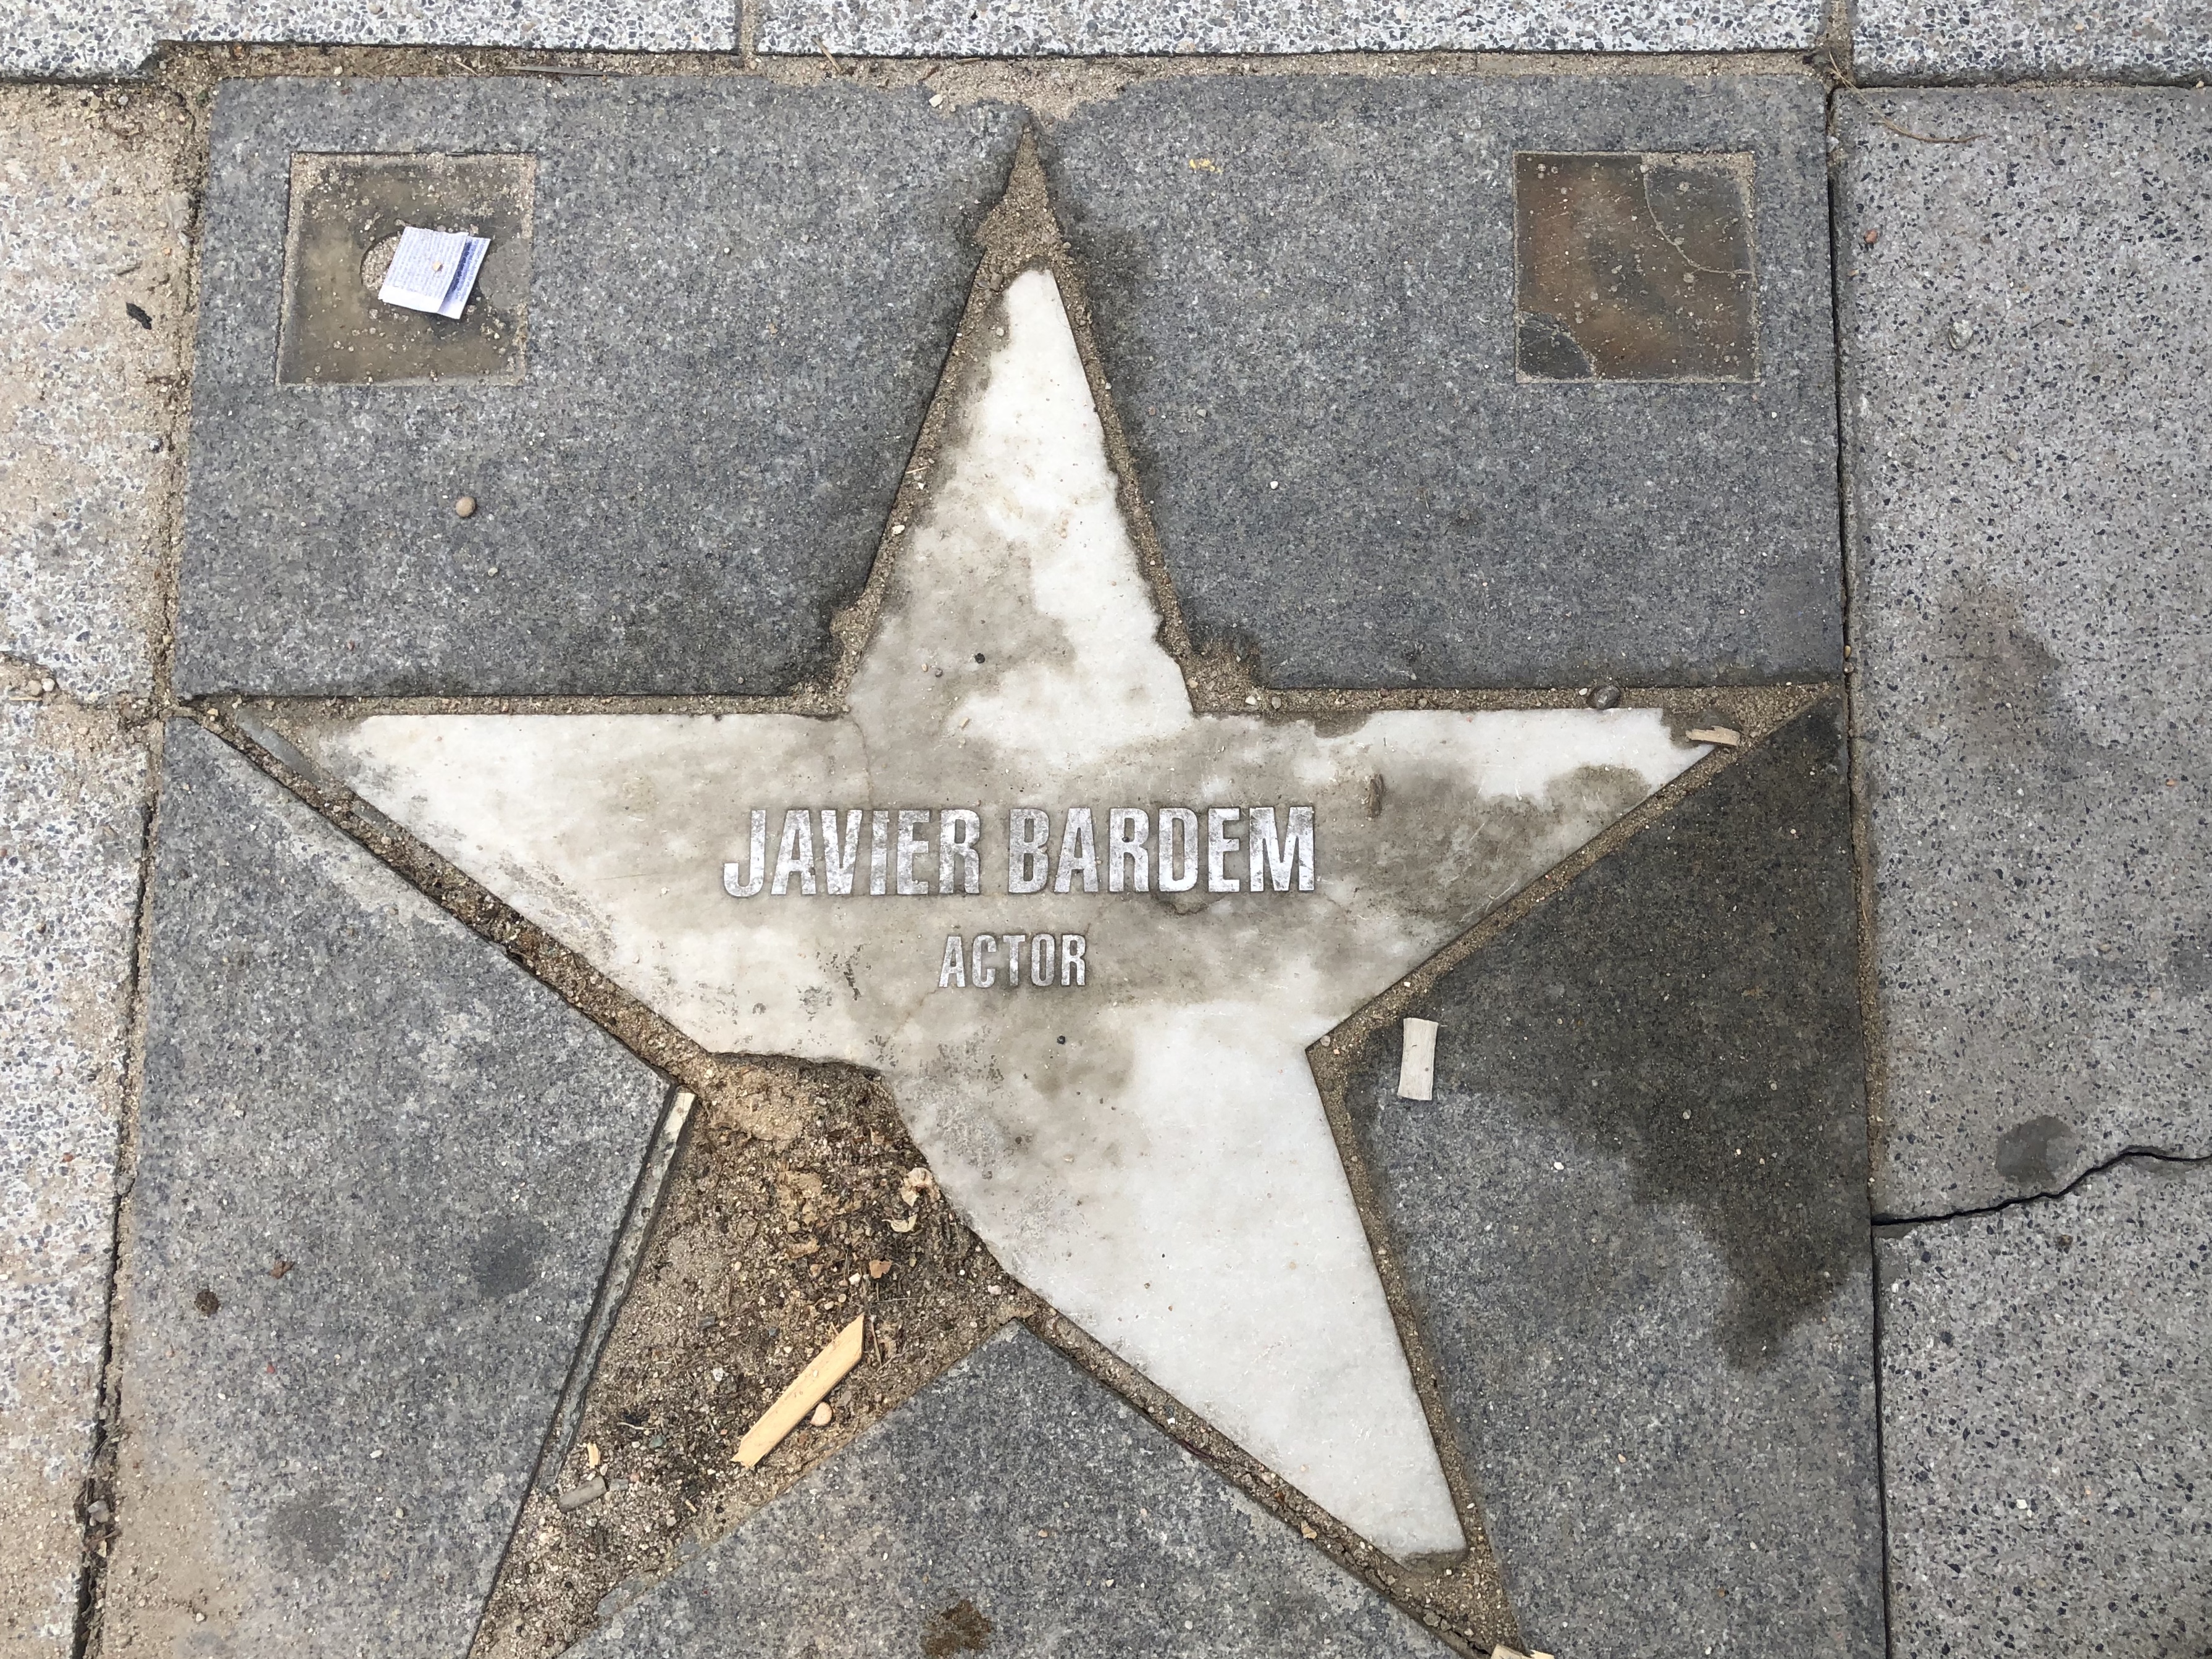 Así está la estrella de Javier Bardem